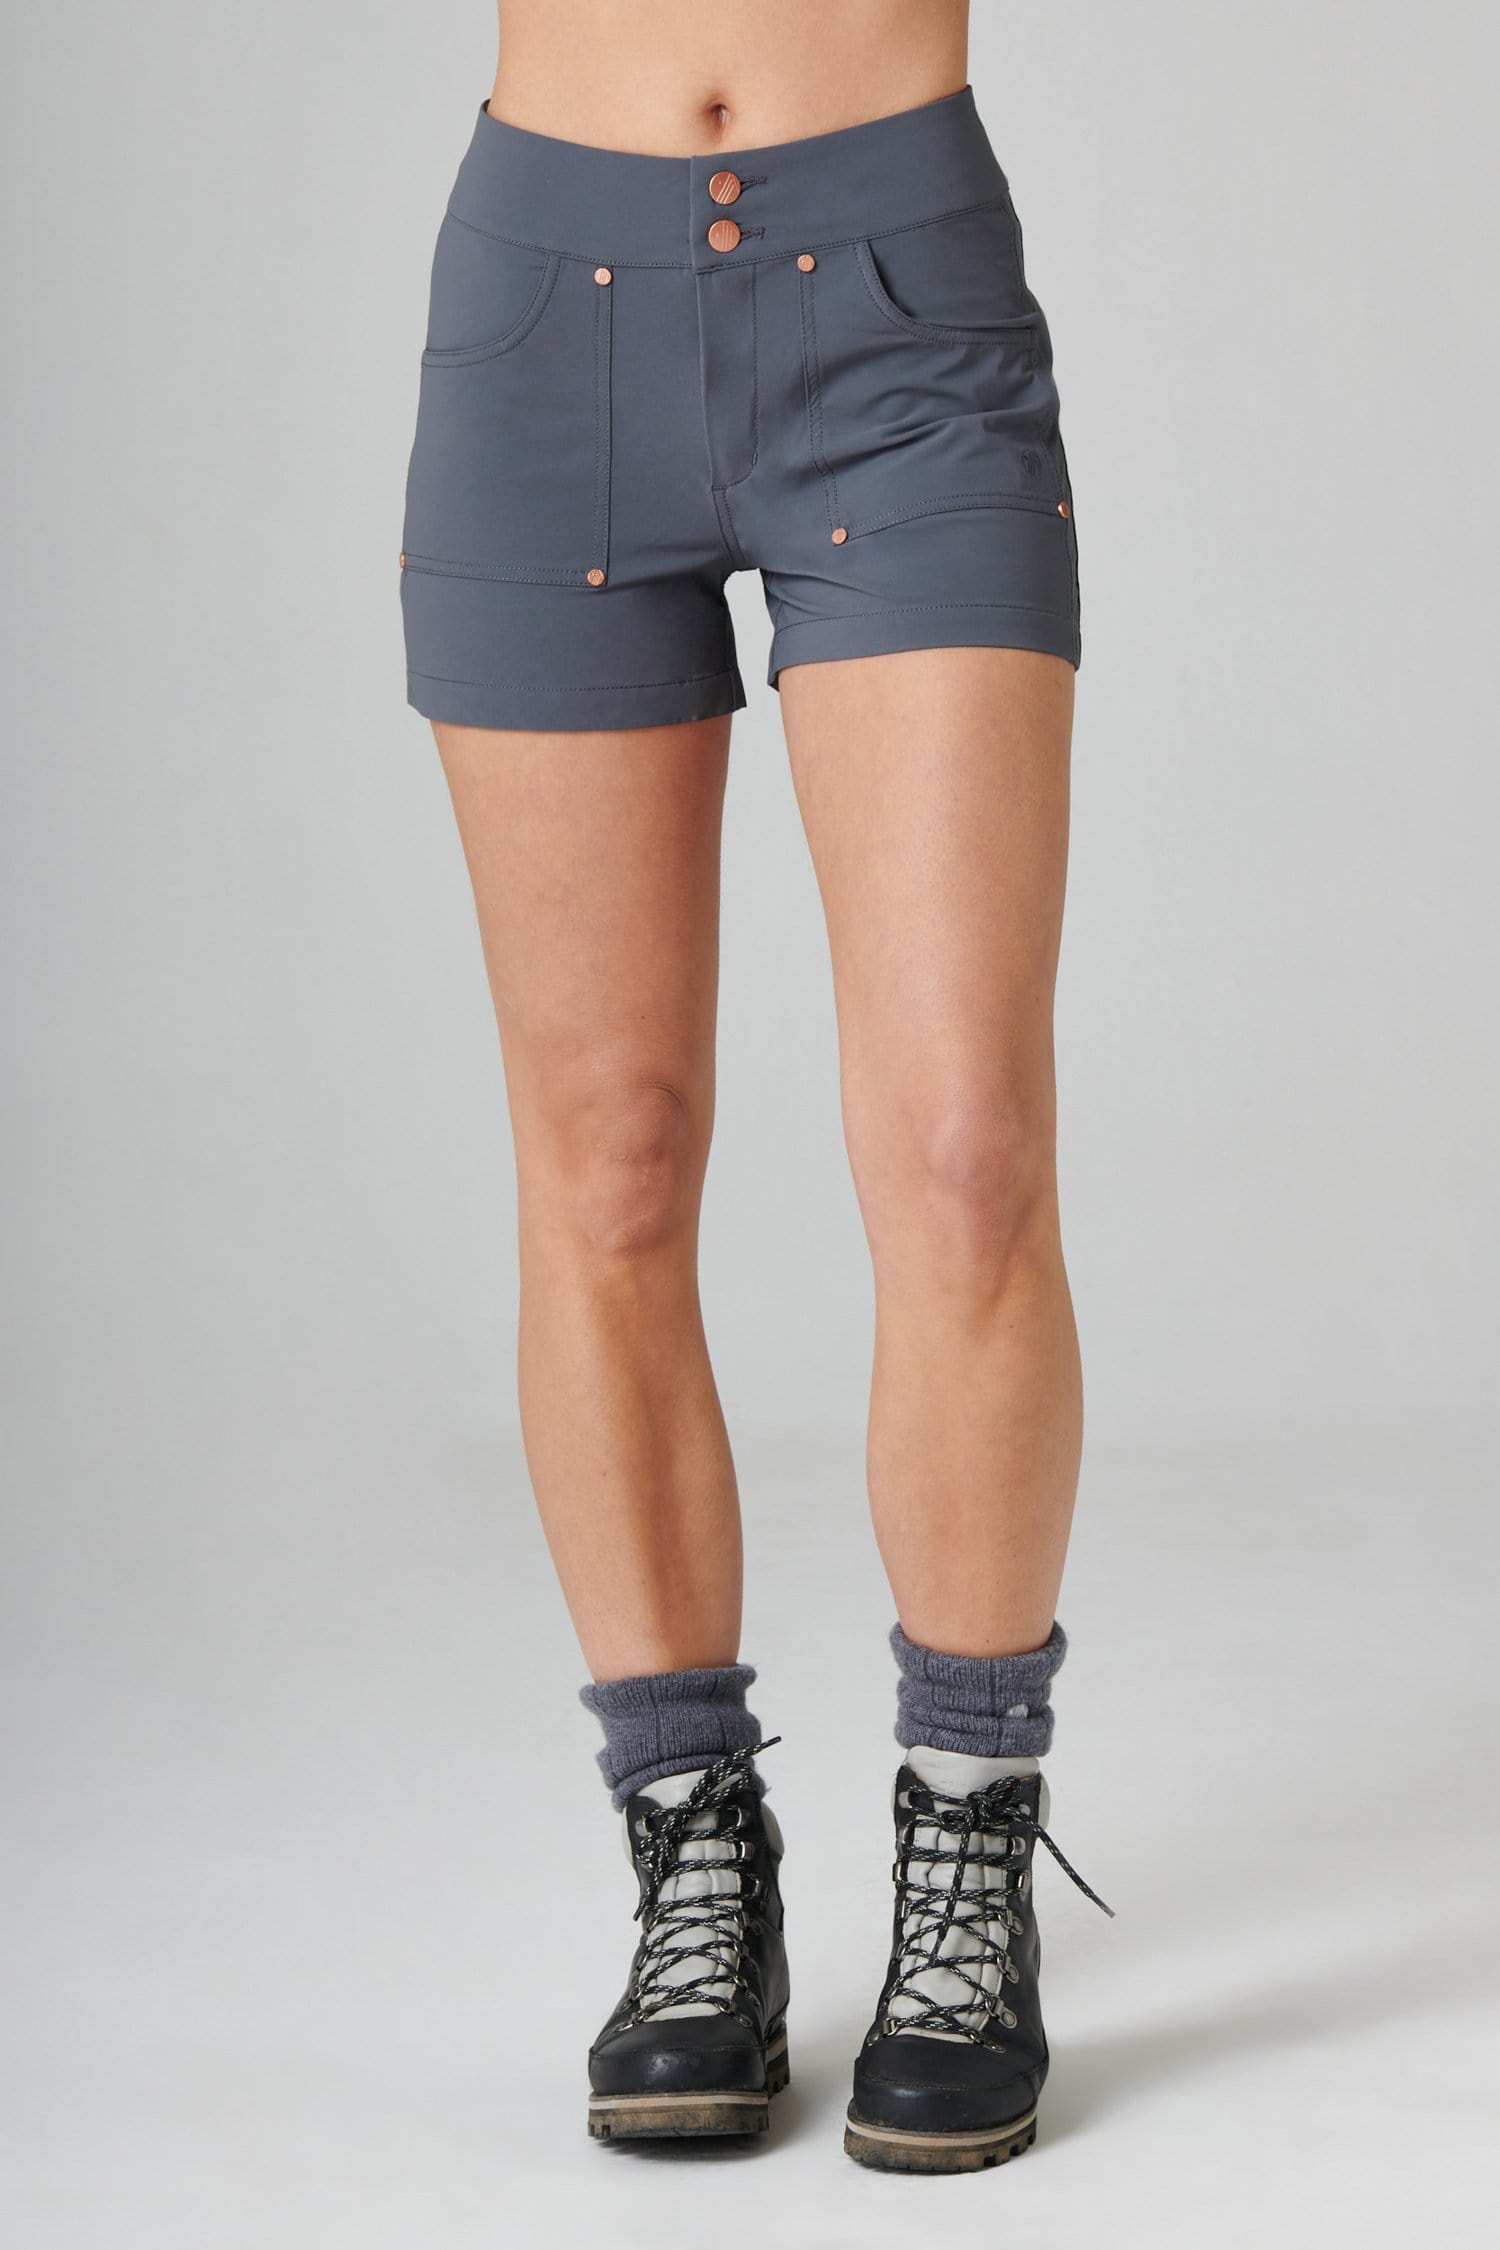 Trek Shorts - Storm Grey - 34 / Uk16 - Womens - Acai Outdoorwear